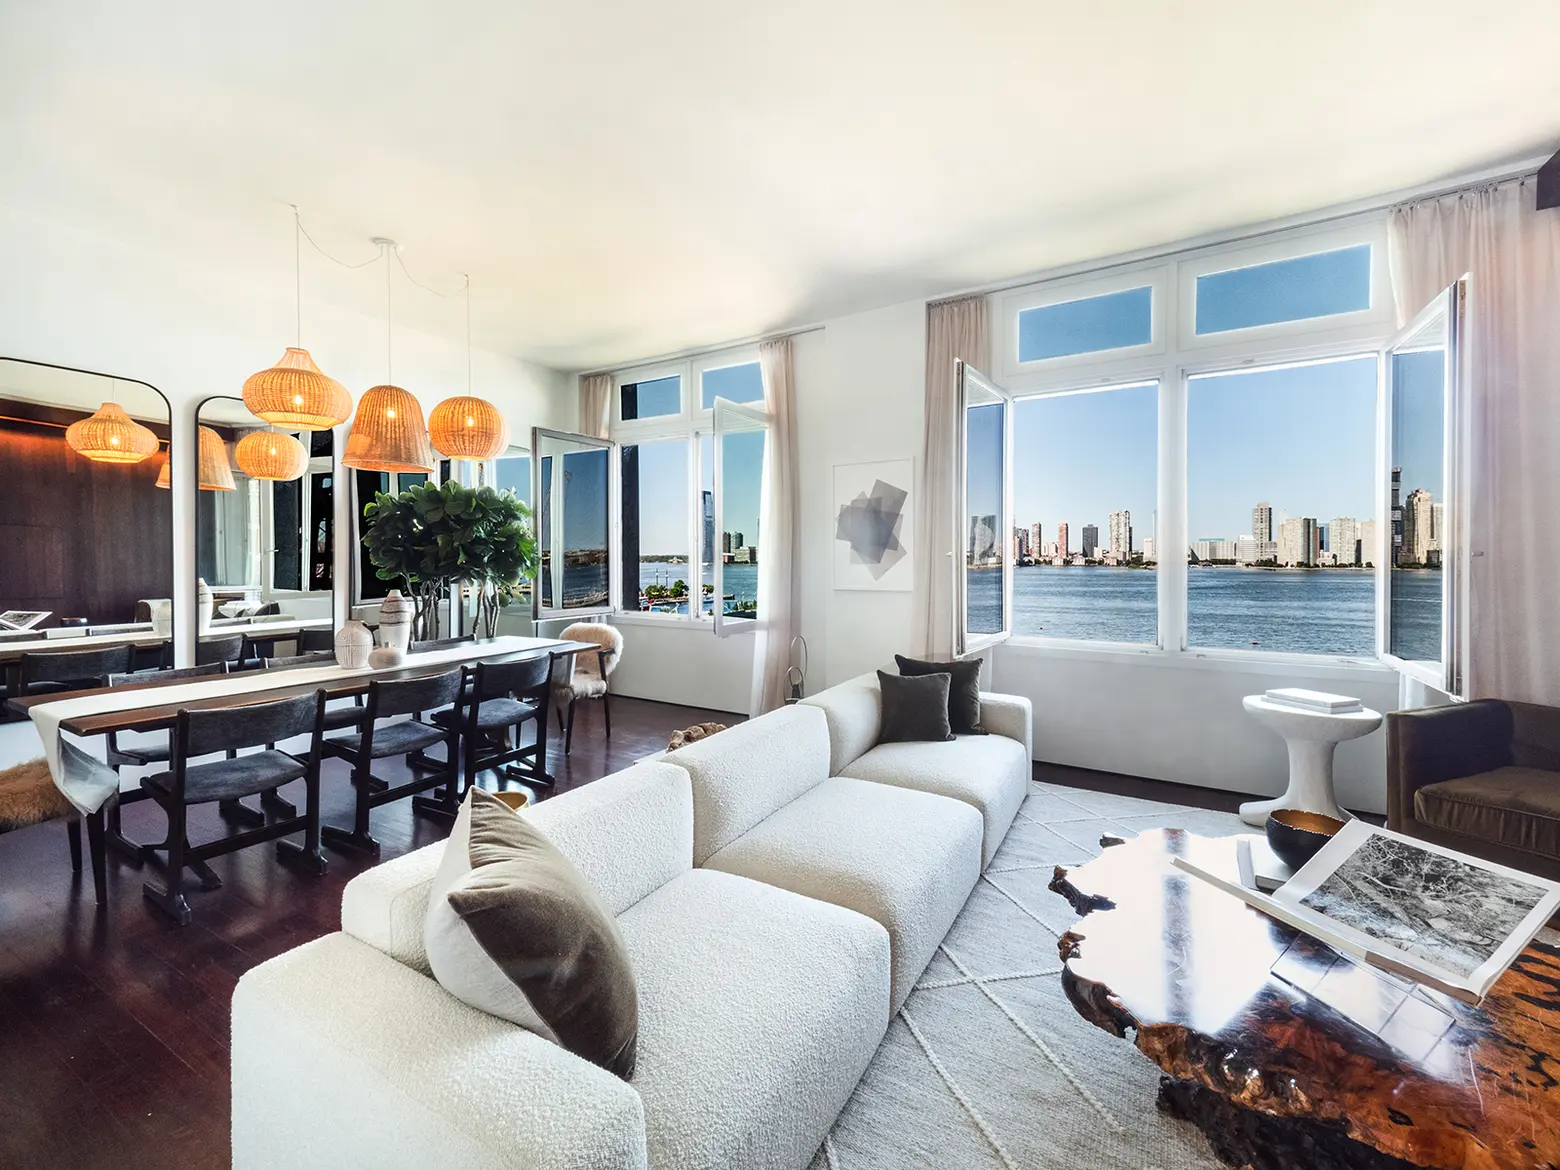 Supermodel Karolina Kurkova lists Tribeca loft with Hudson River views for $4.7M